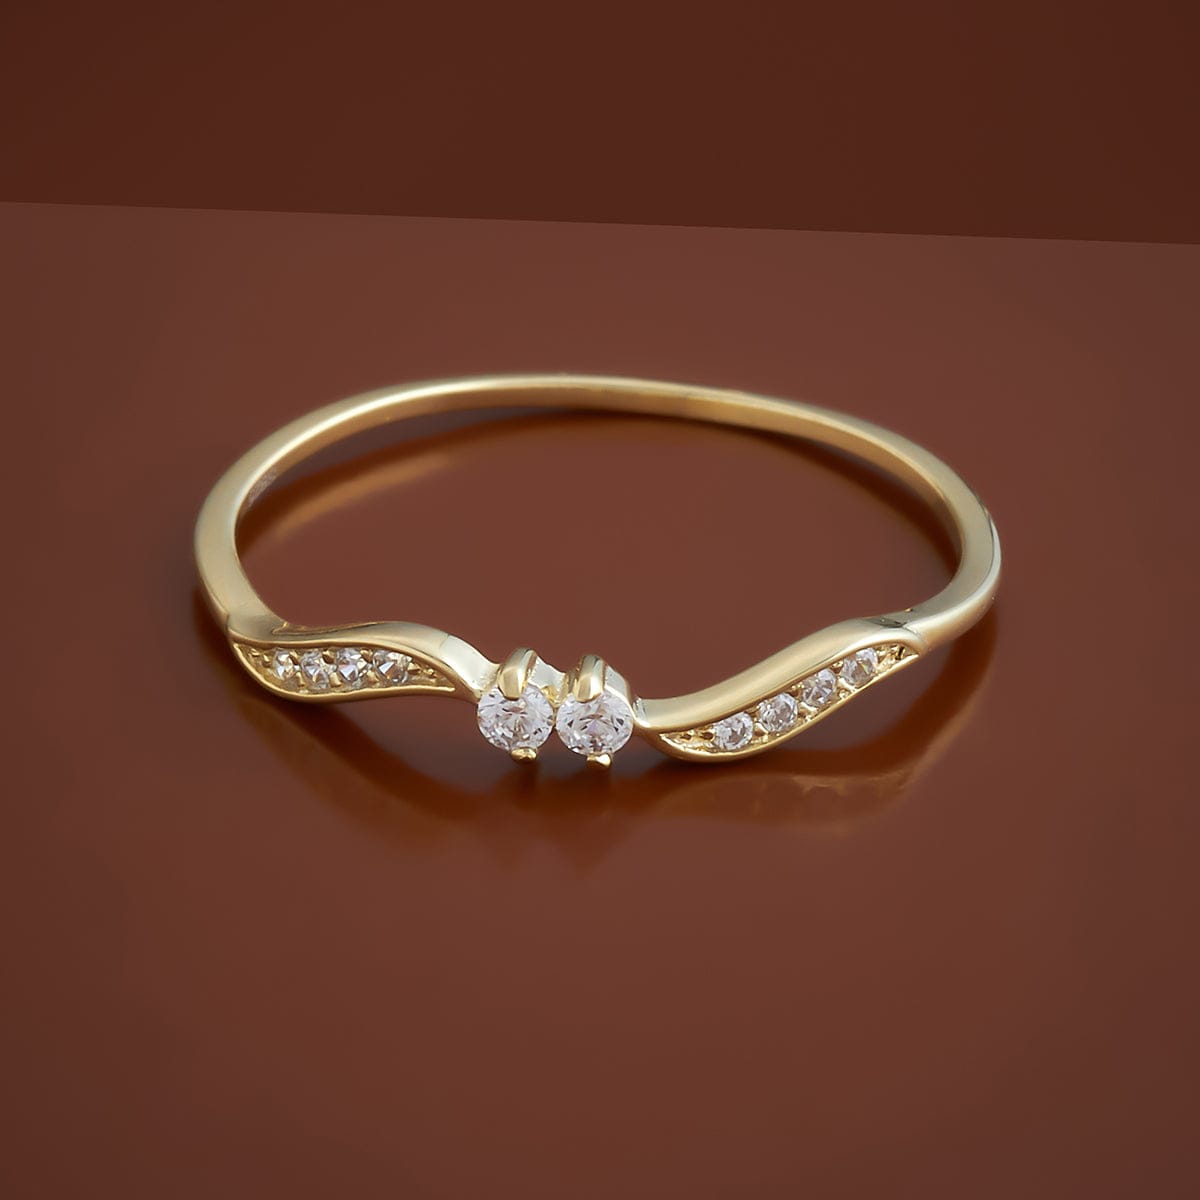 Bone Dog 925 Sterling Silver Open Finger Ring For Fashion Women CZ Jewelry  Gifts | eBay